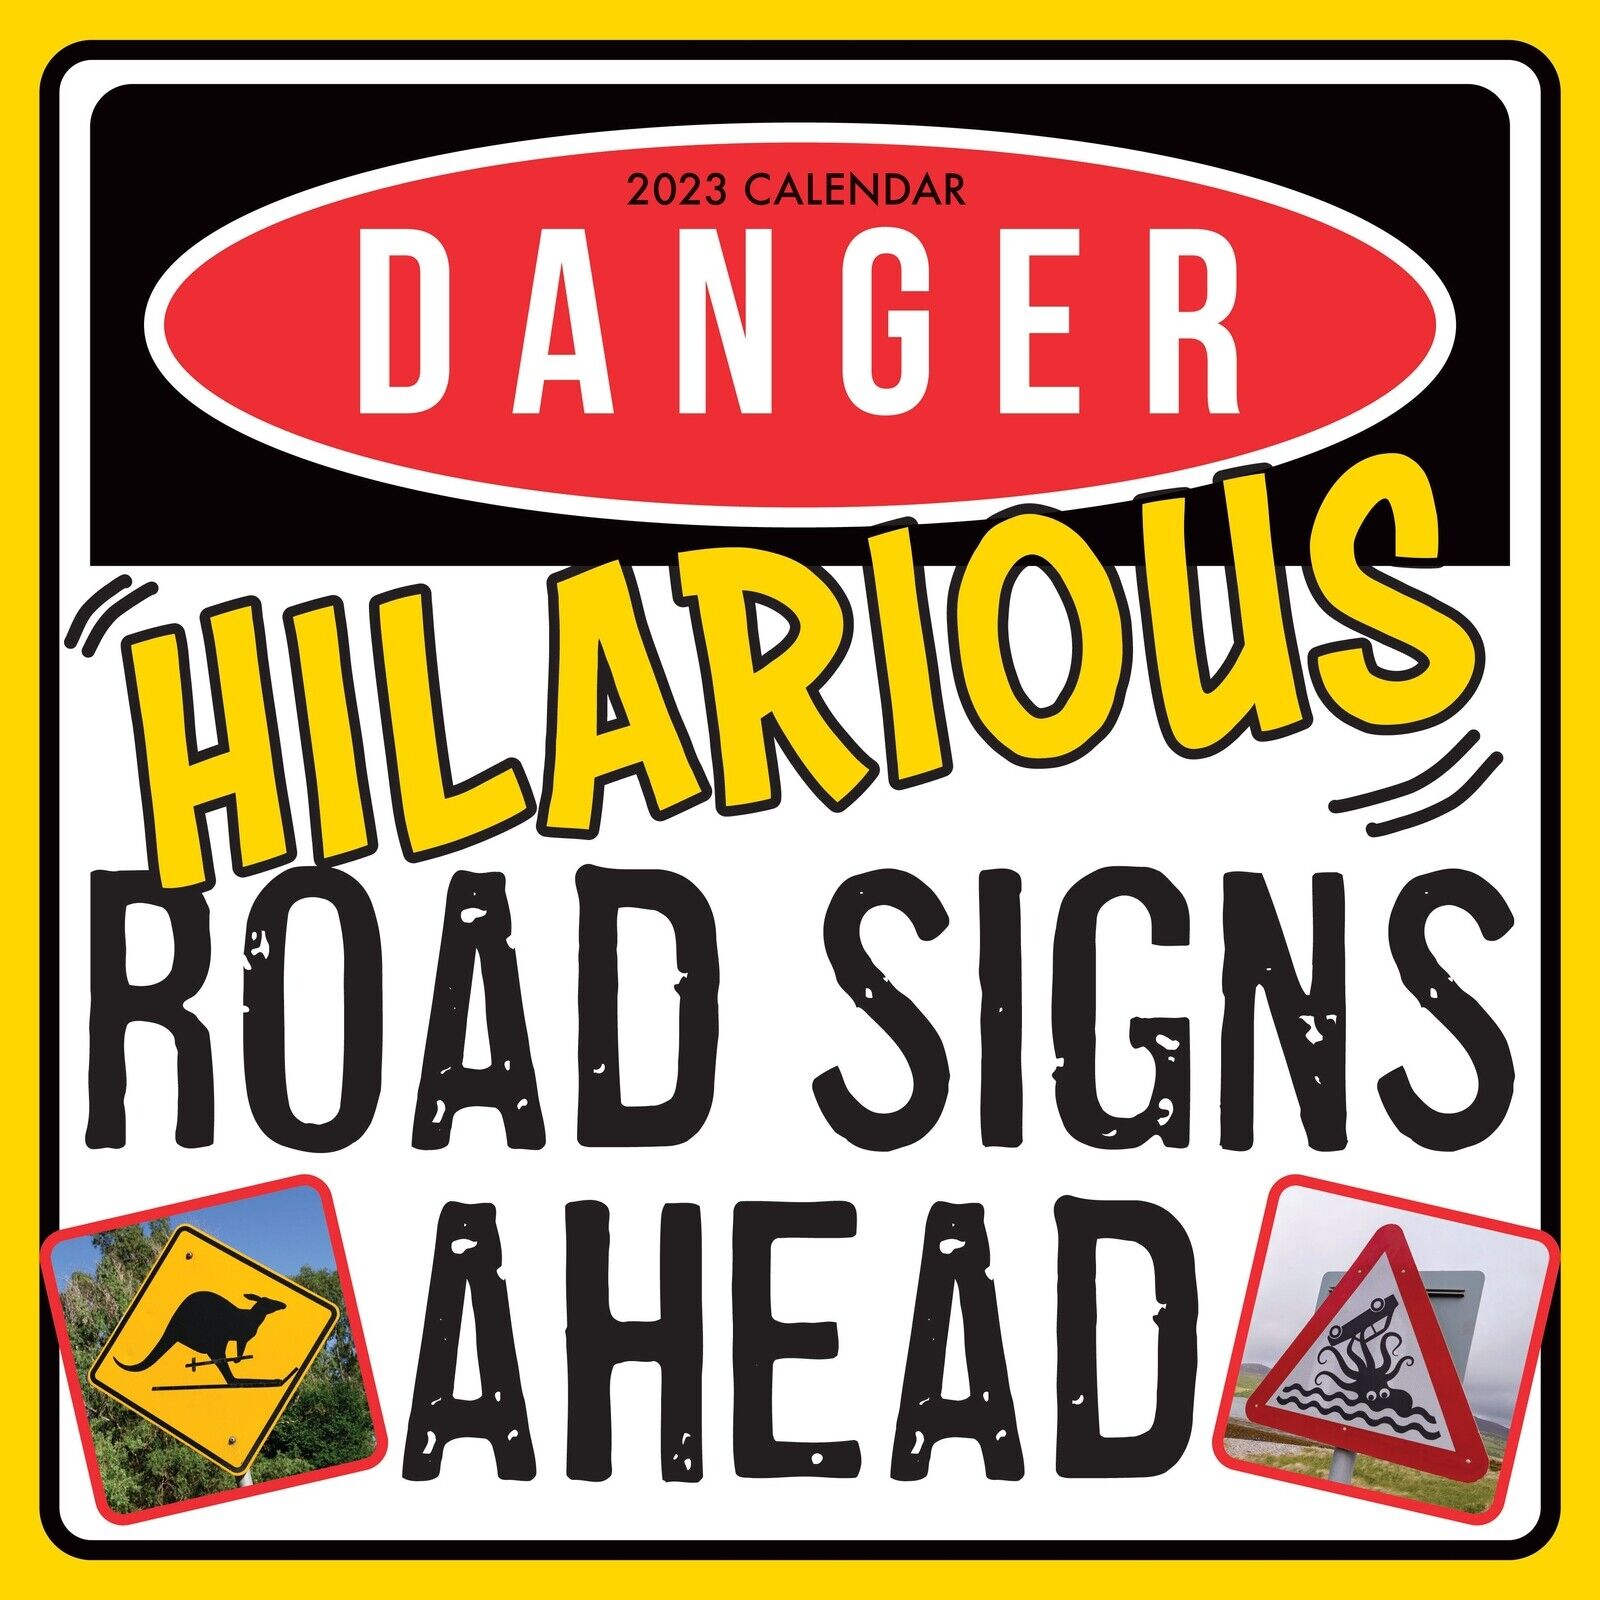 2023 Wall Calendar - Danger Hilarious Road Signs Ahead, 12x12\